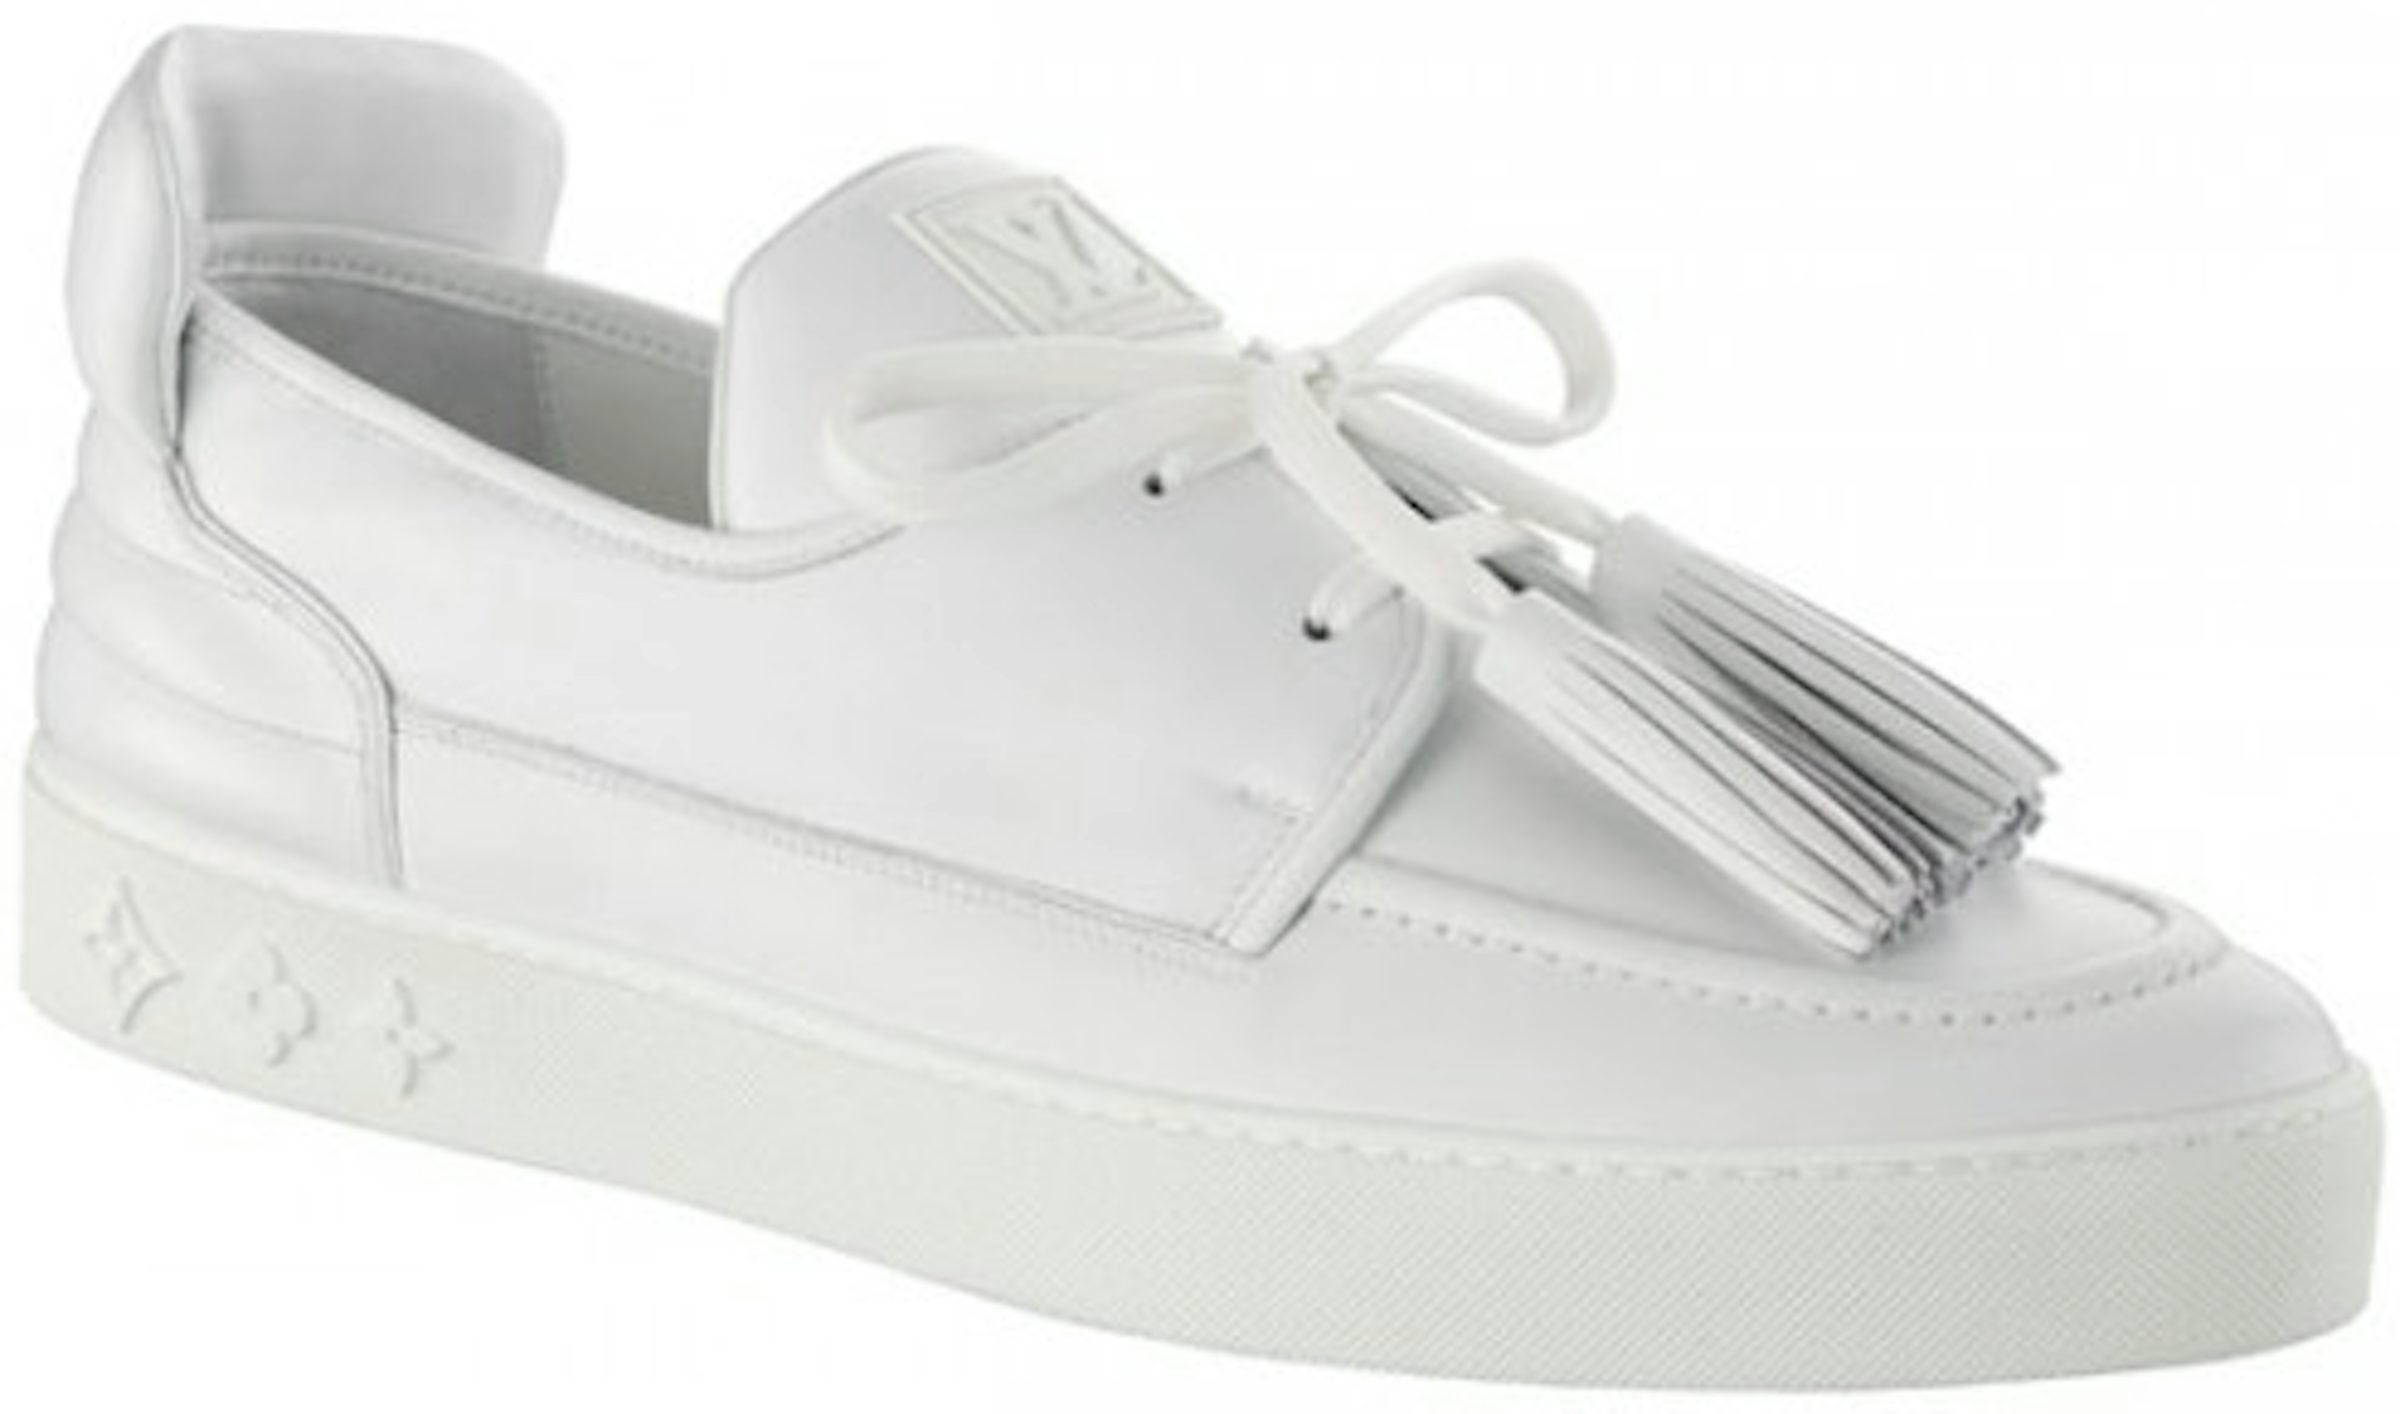 NEW FASHION] Grey Louis Vuitton Air Jordan 11 Shoes Hot 2023 LV Sneakers  Gifts For Men